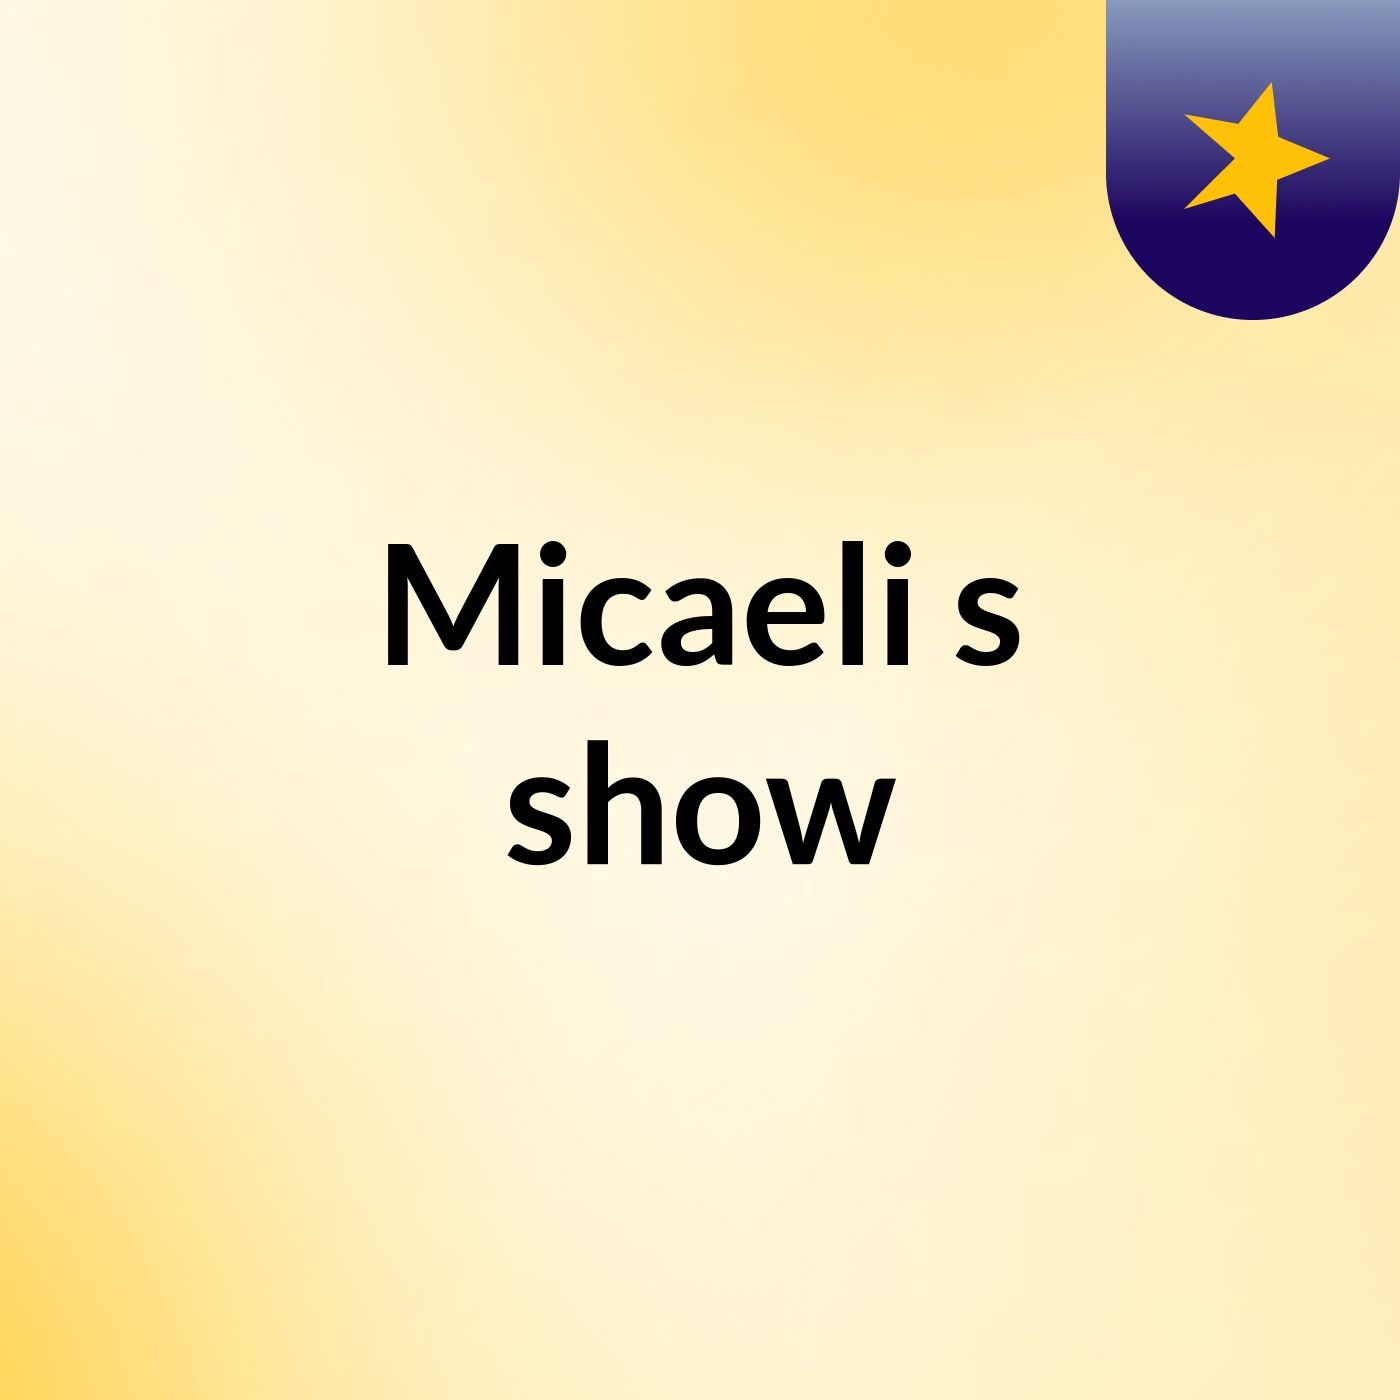 Micaeli's show